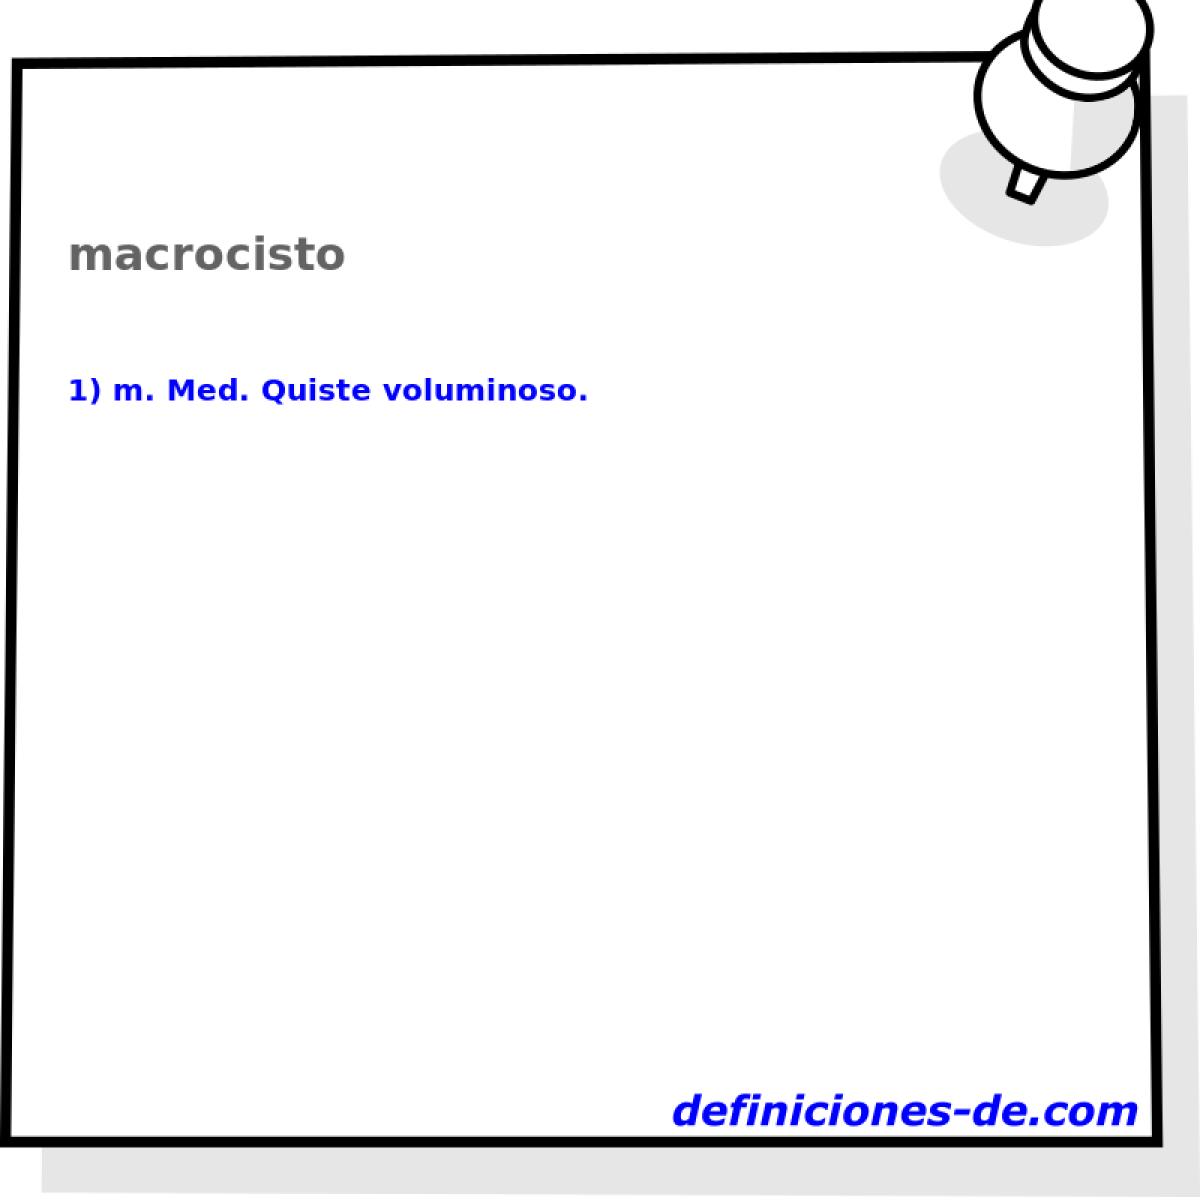 macrocisto 